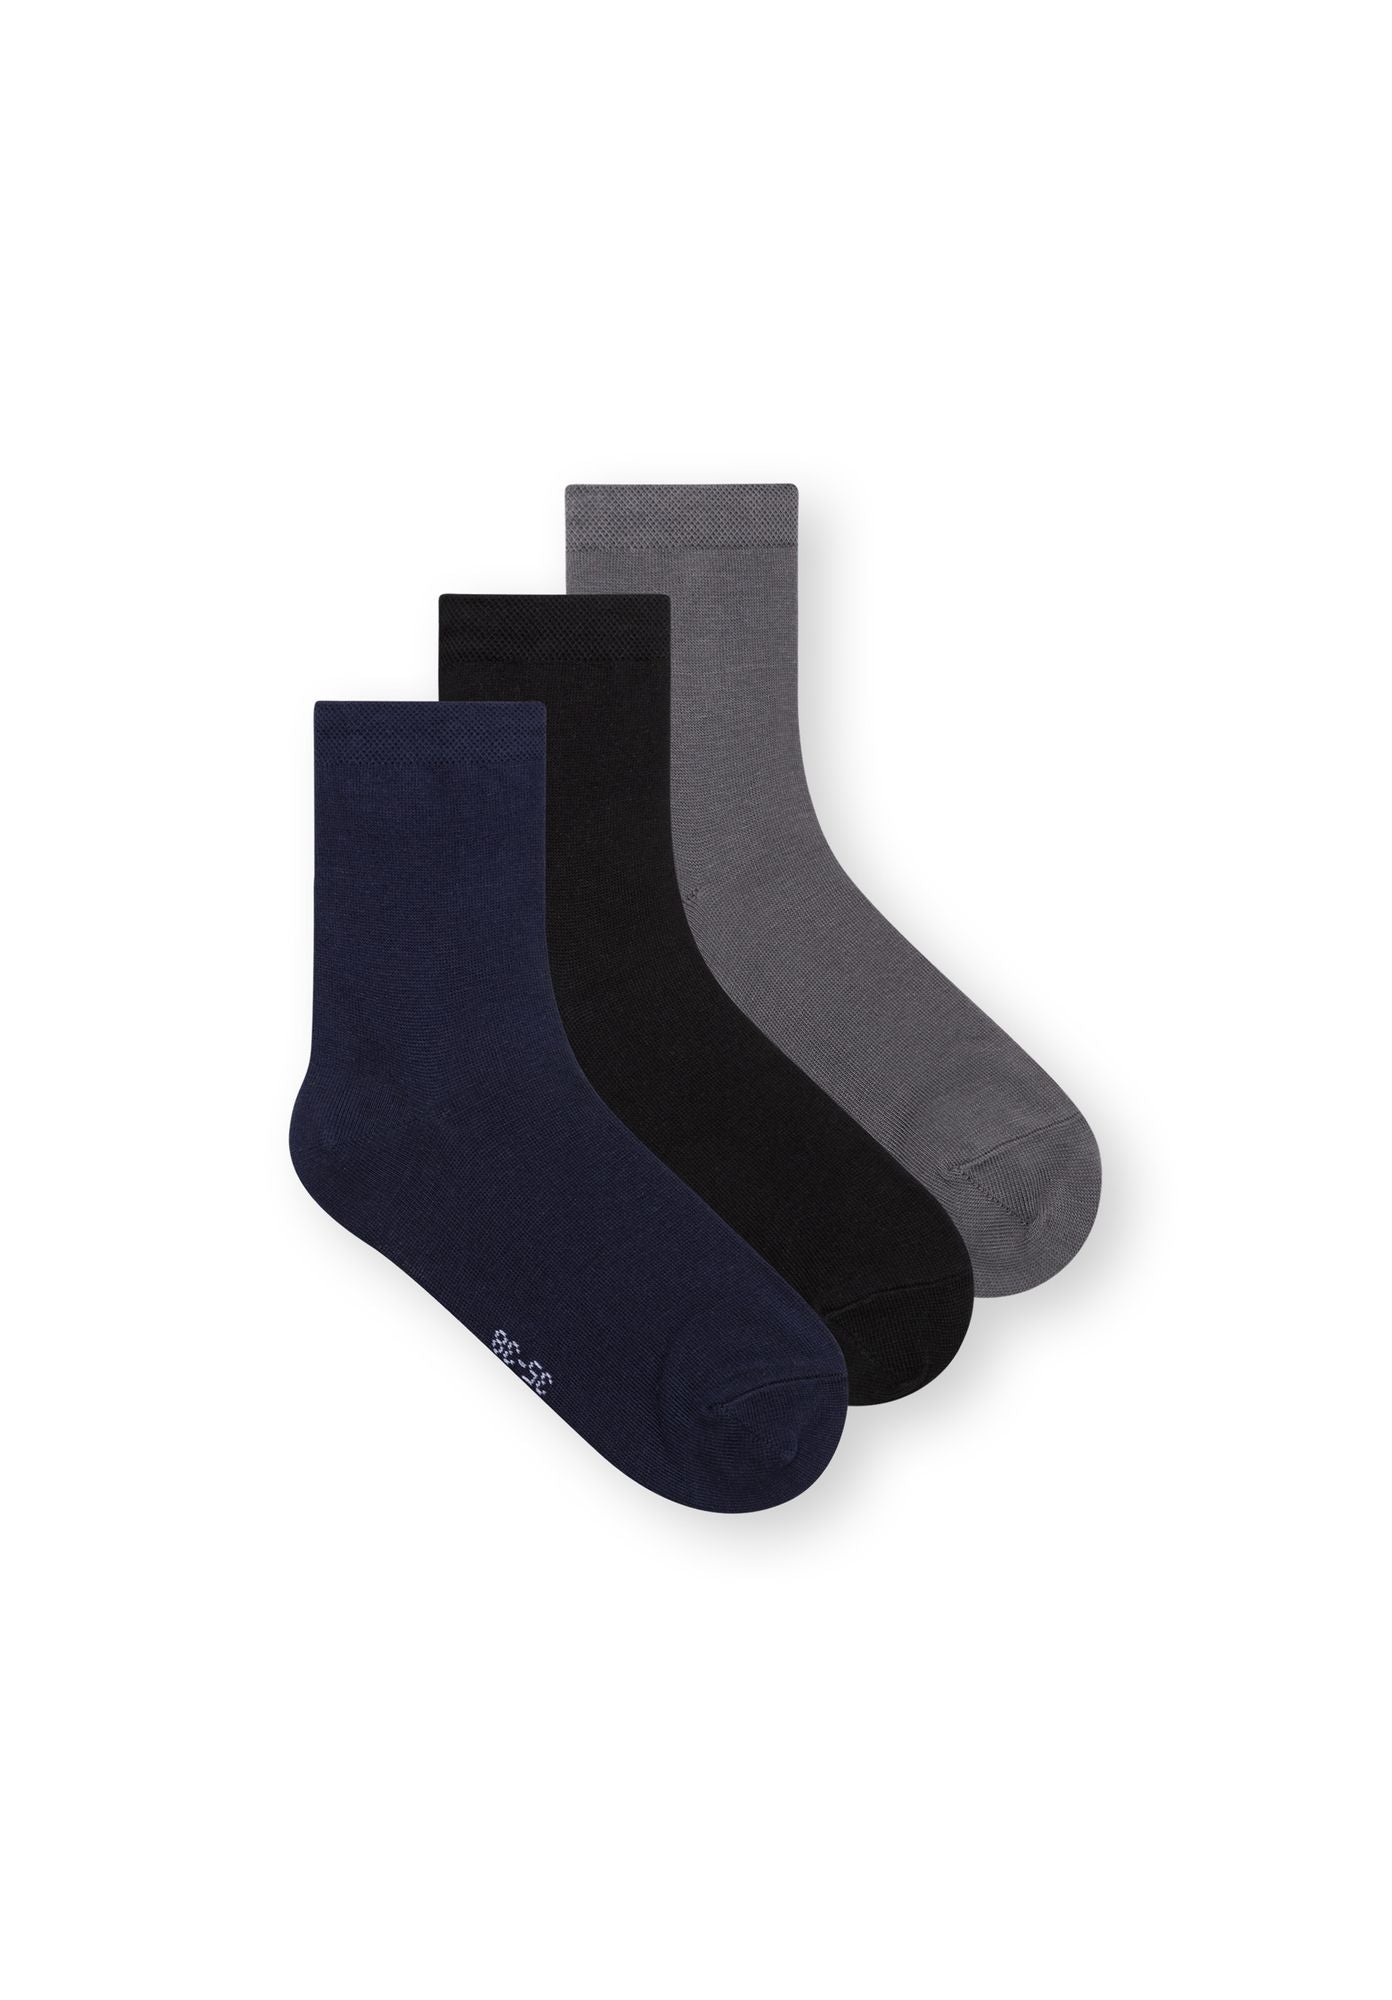 3 Pack Mid Socks Black/Graphite/Midnight